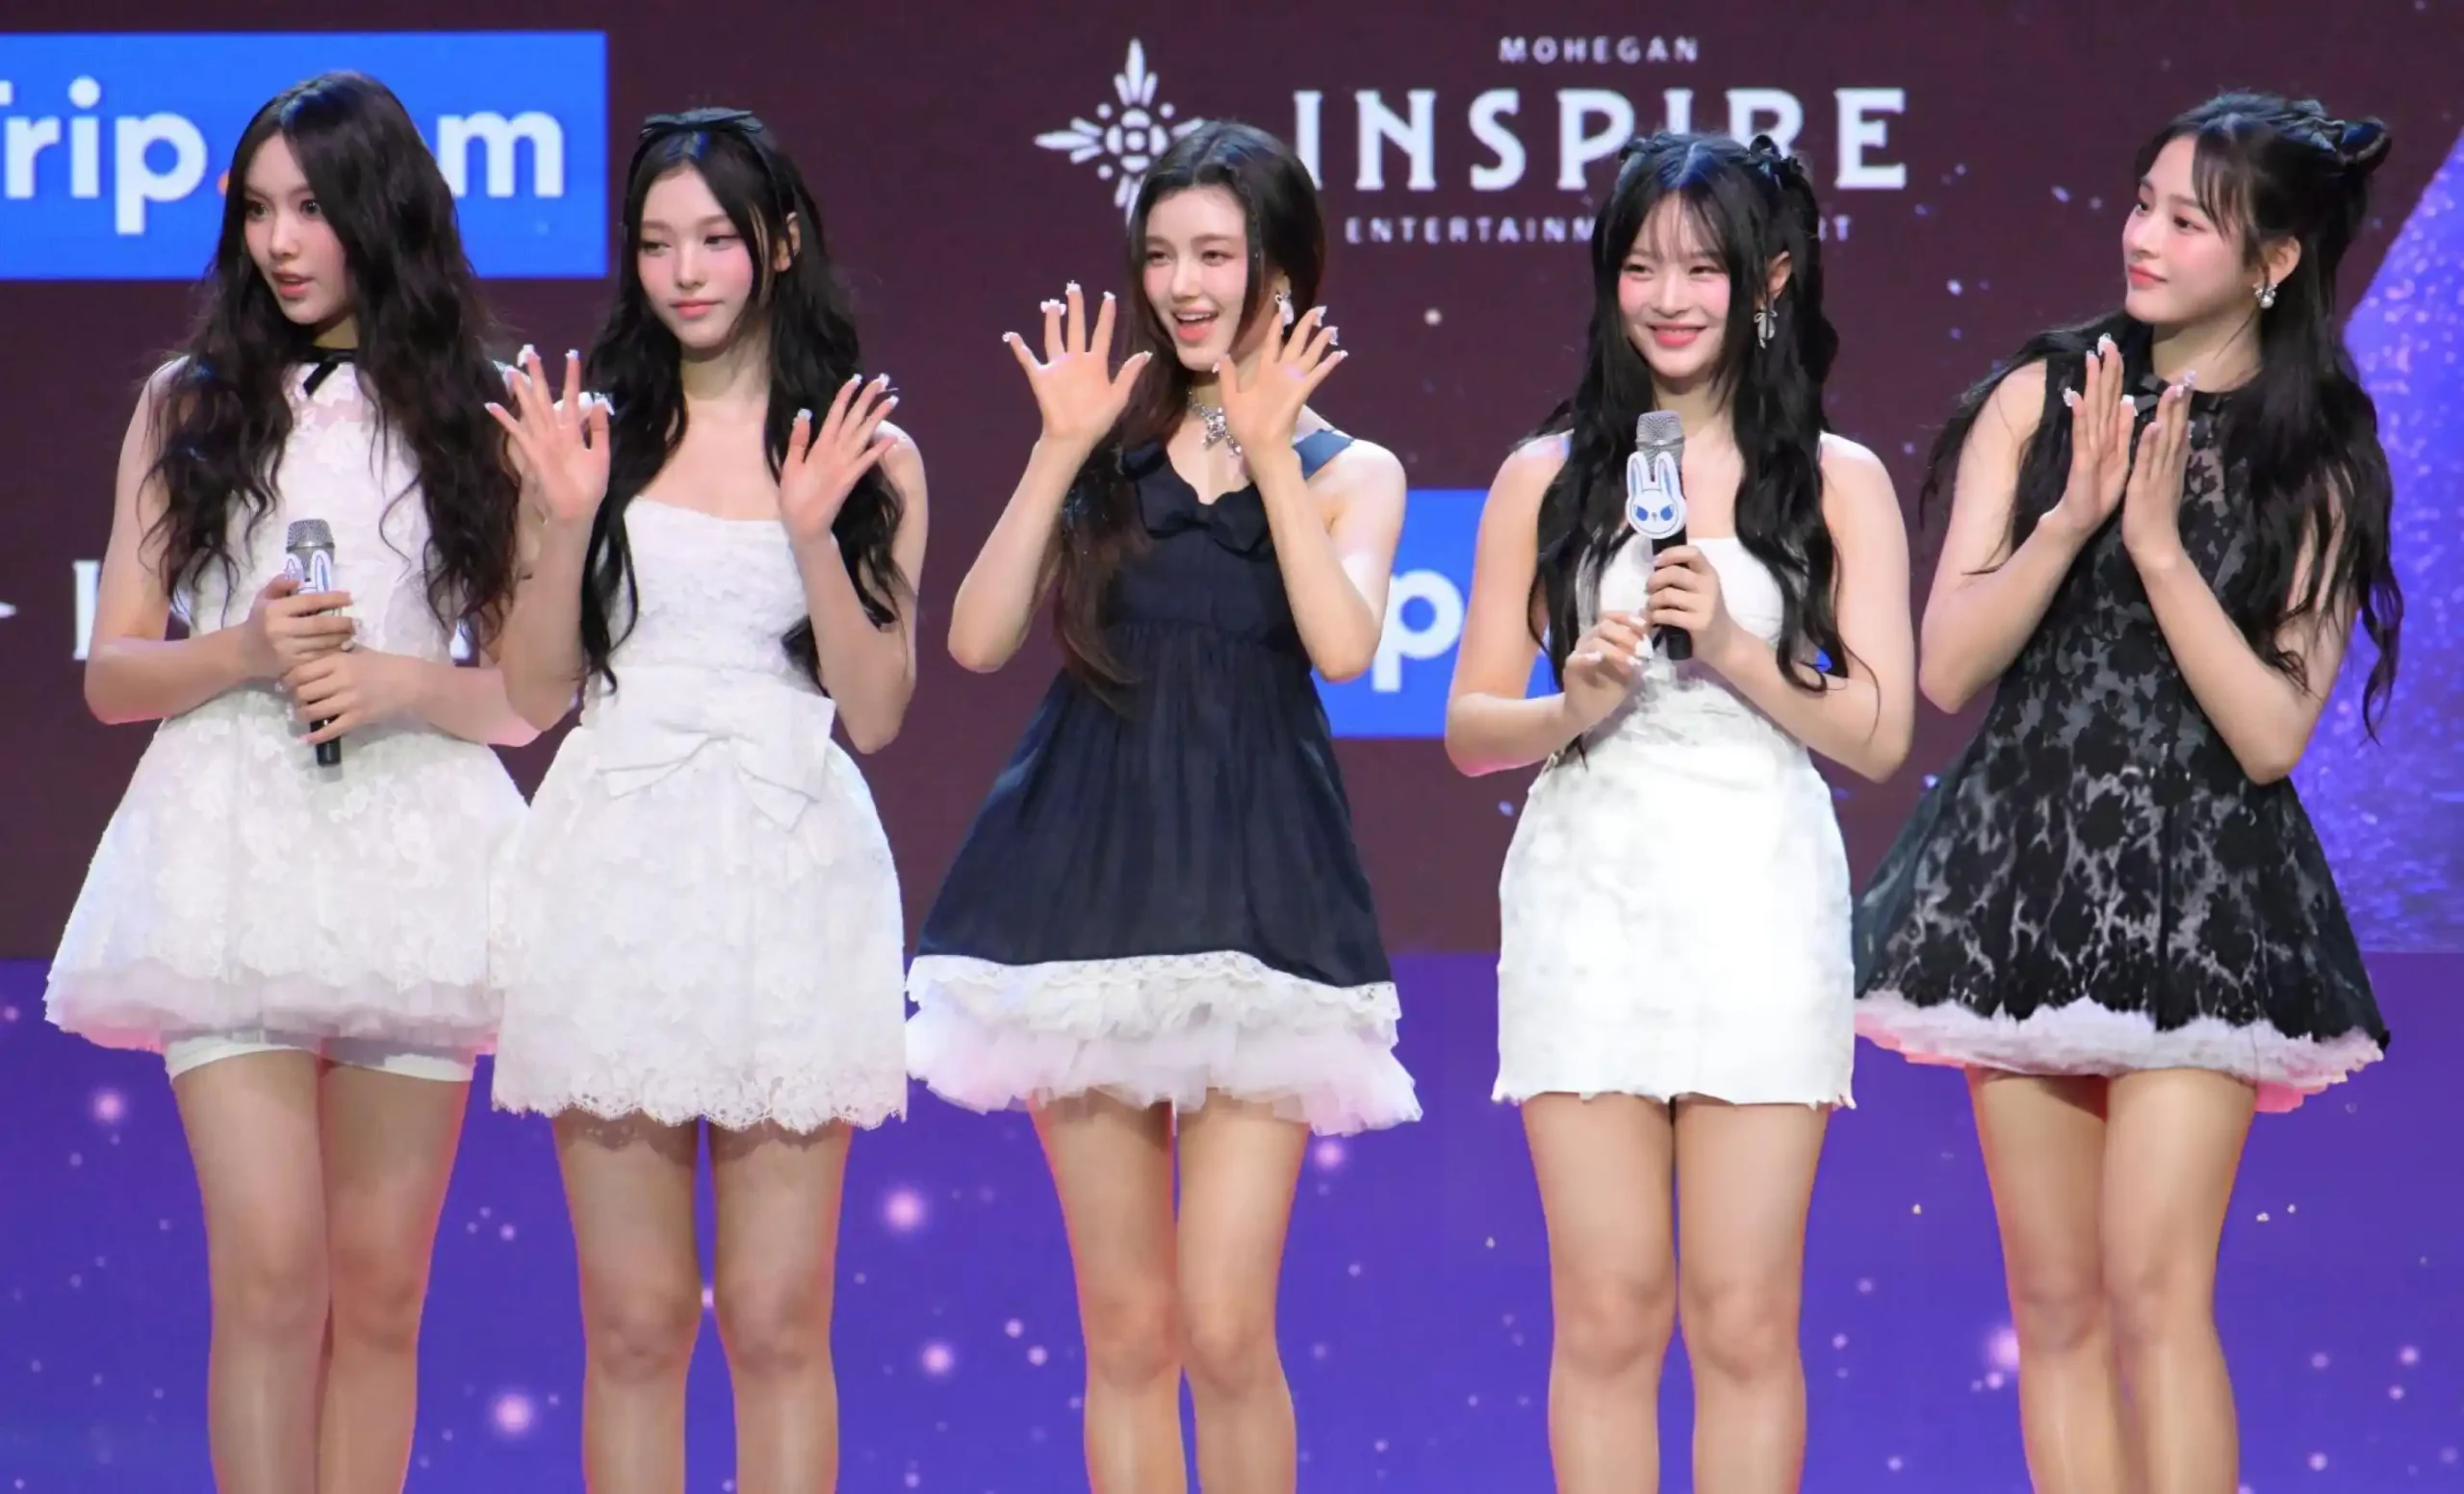 NewJeans Members: Minji, Hanni, Danielle, Haerin, and Hyein